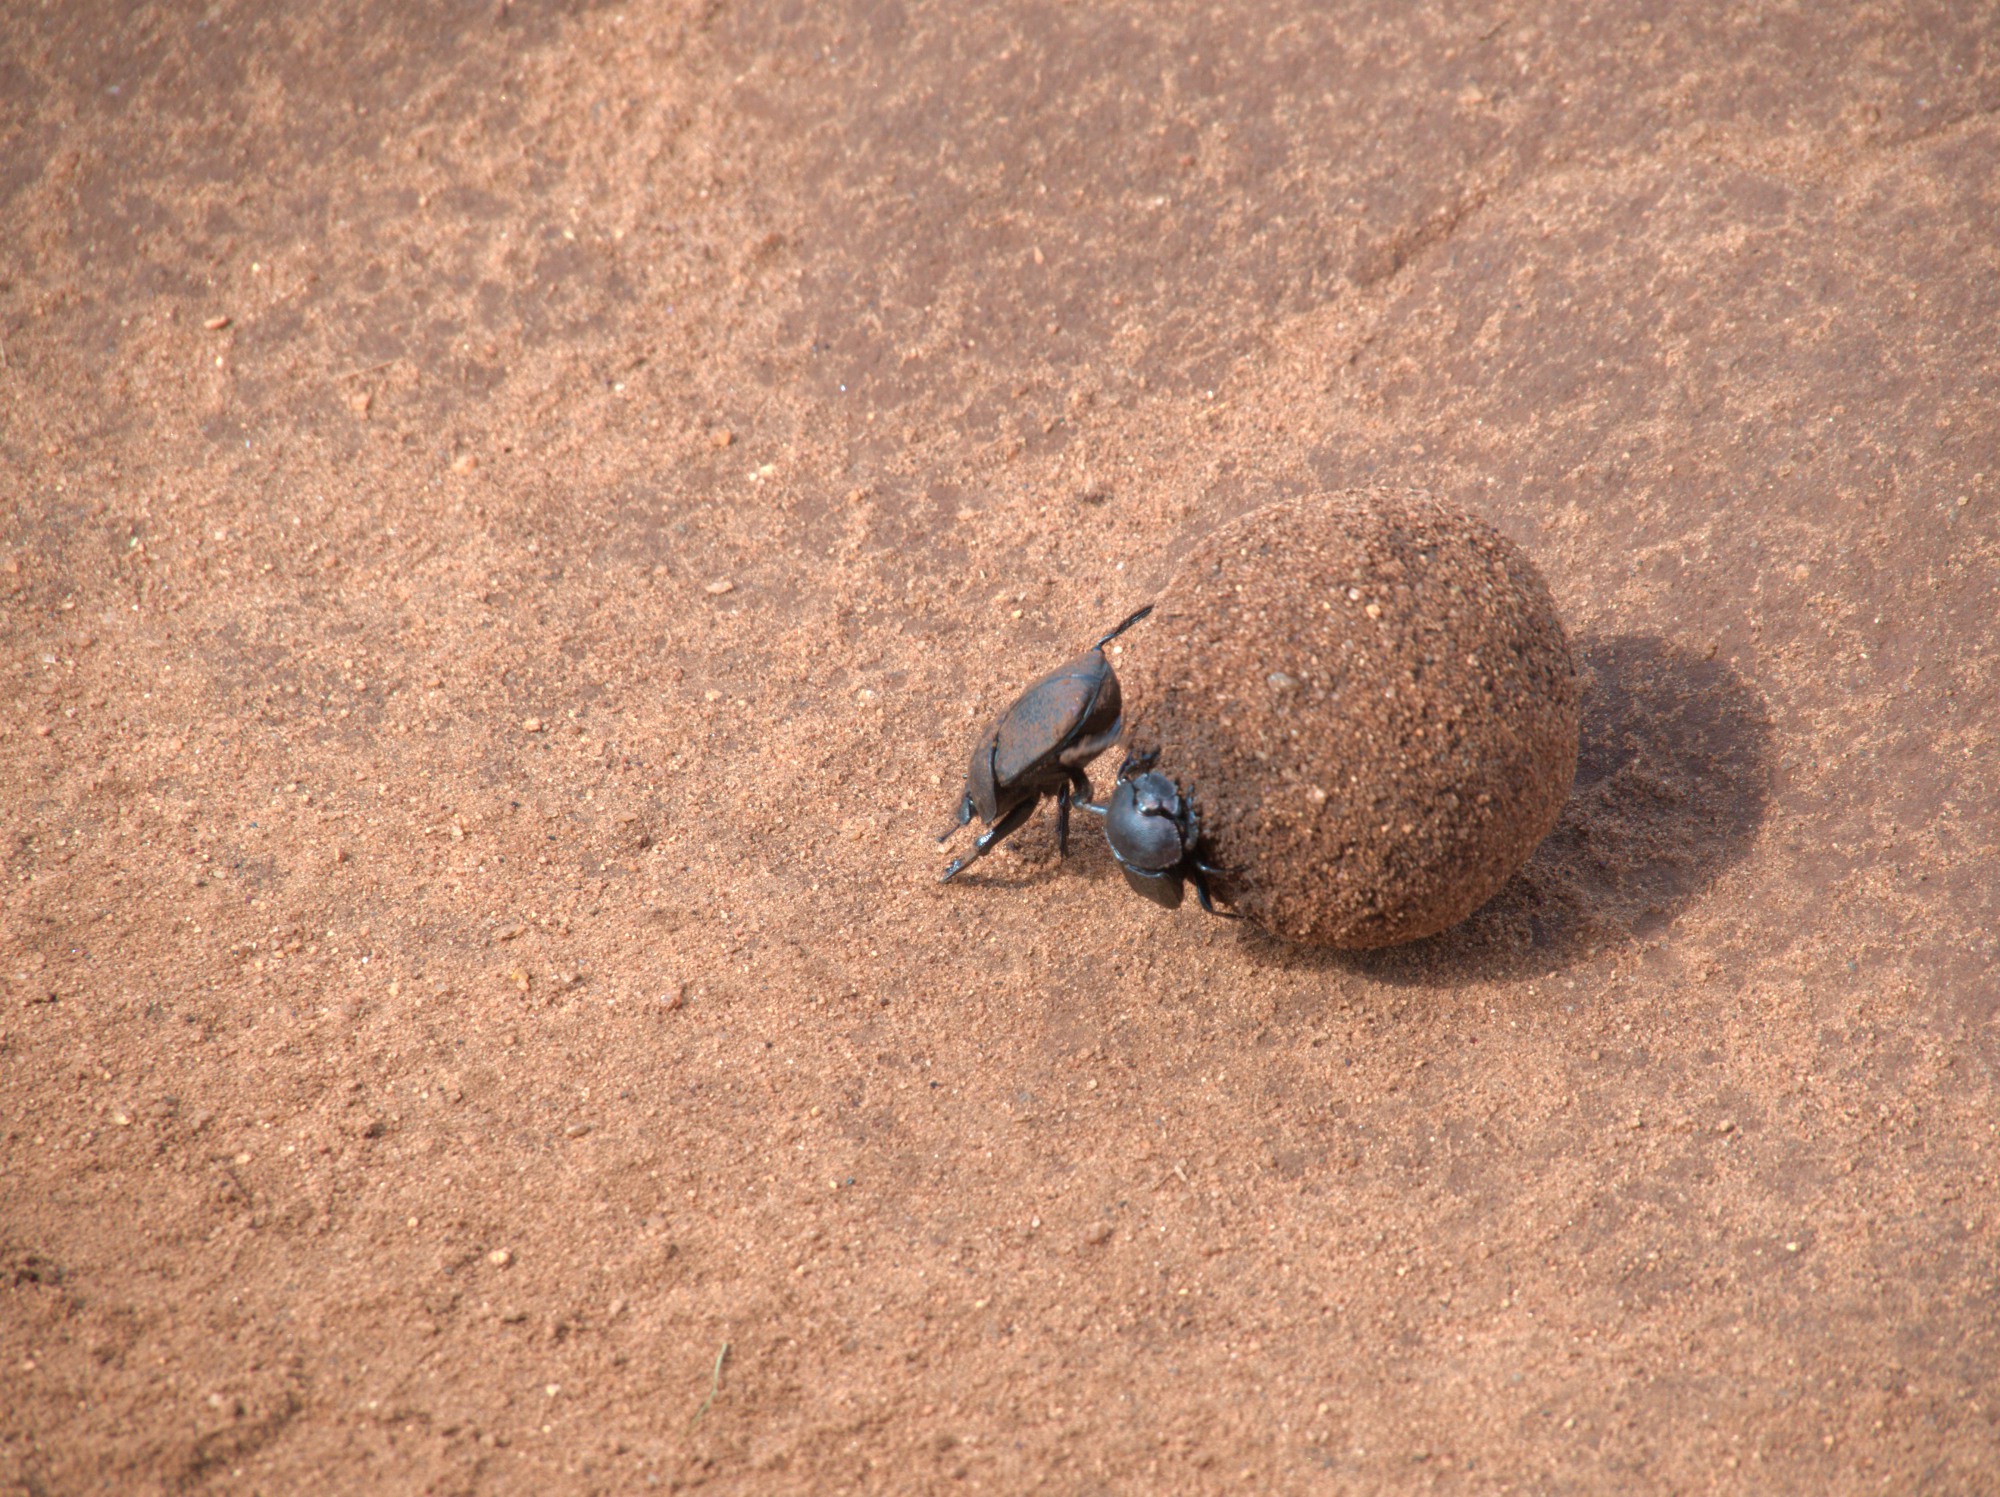 Dung beetle!